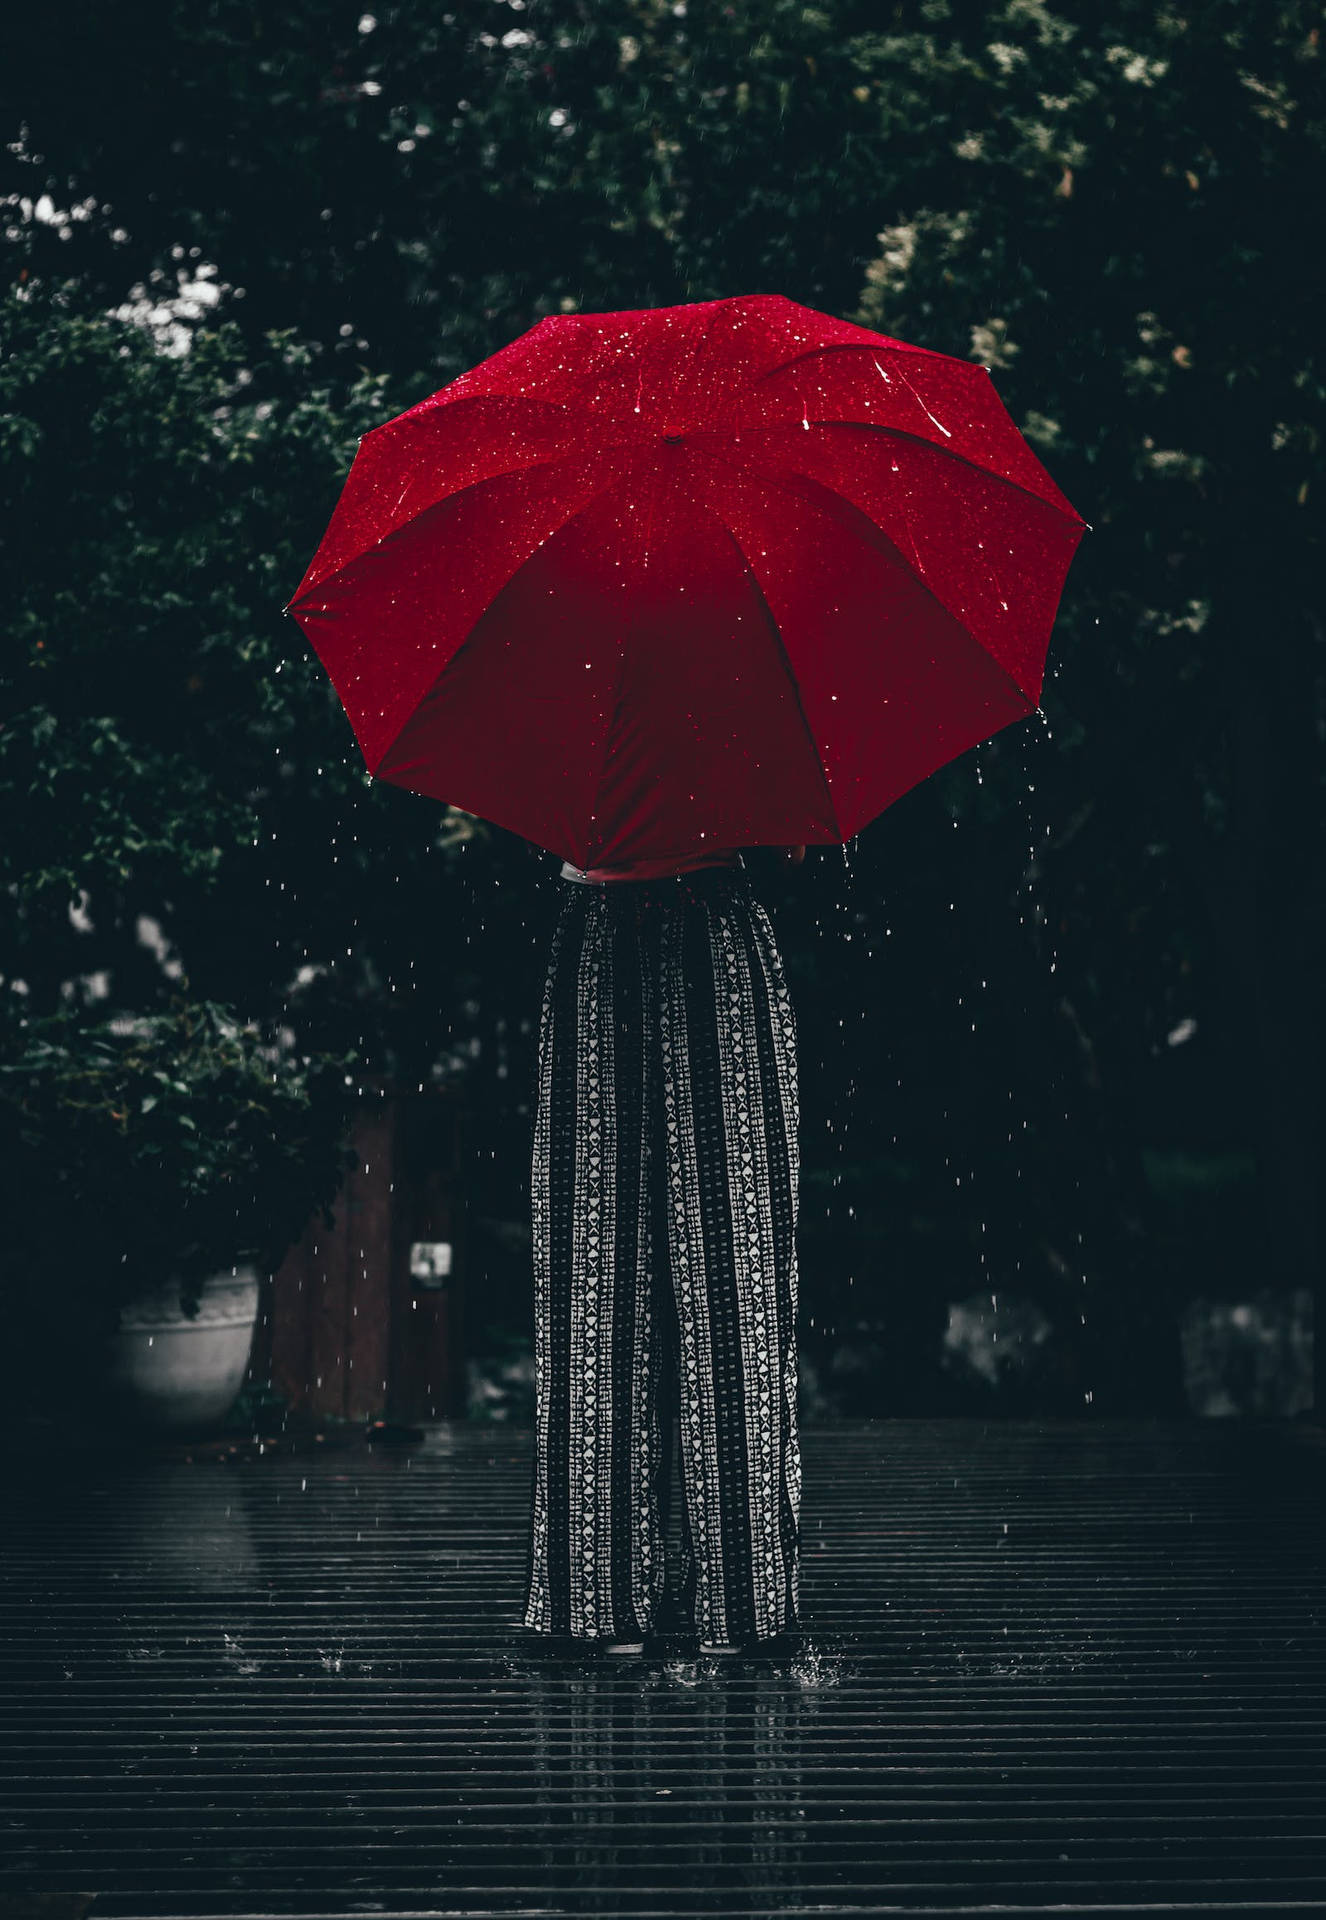 Raining Down On A Red Umbrella